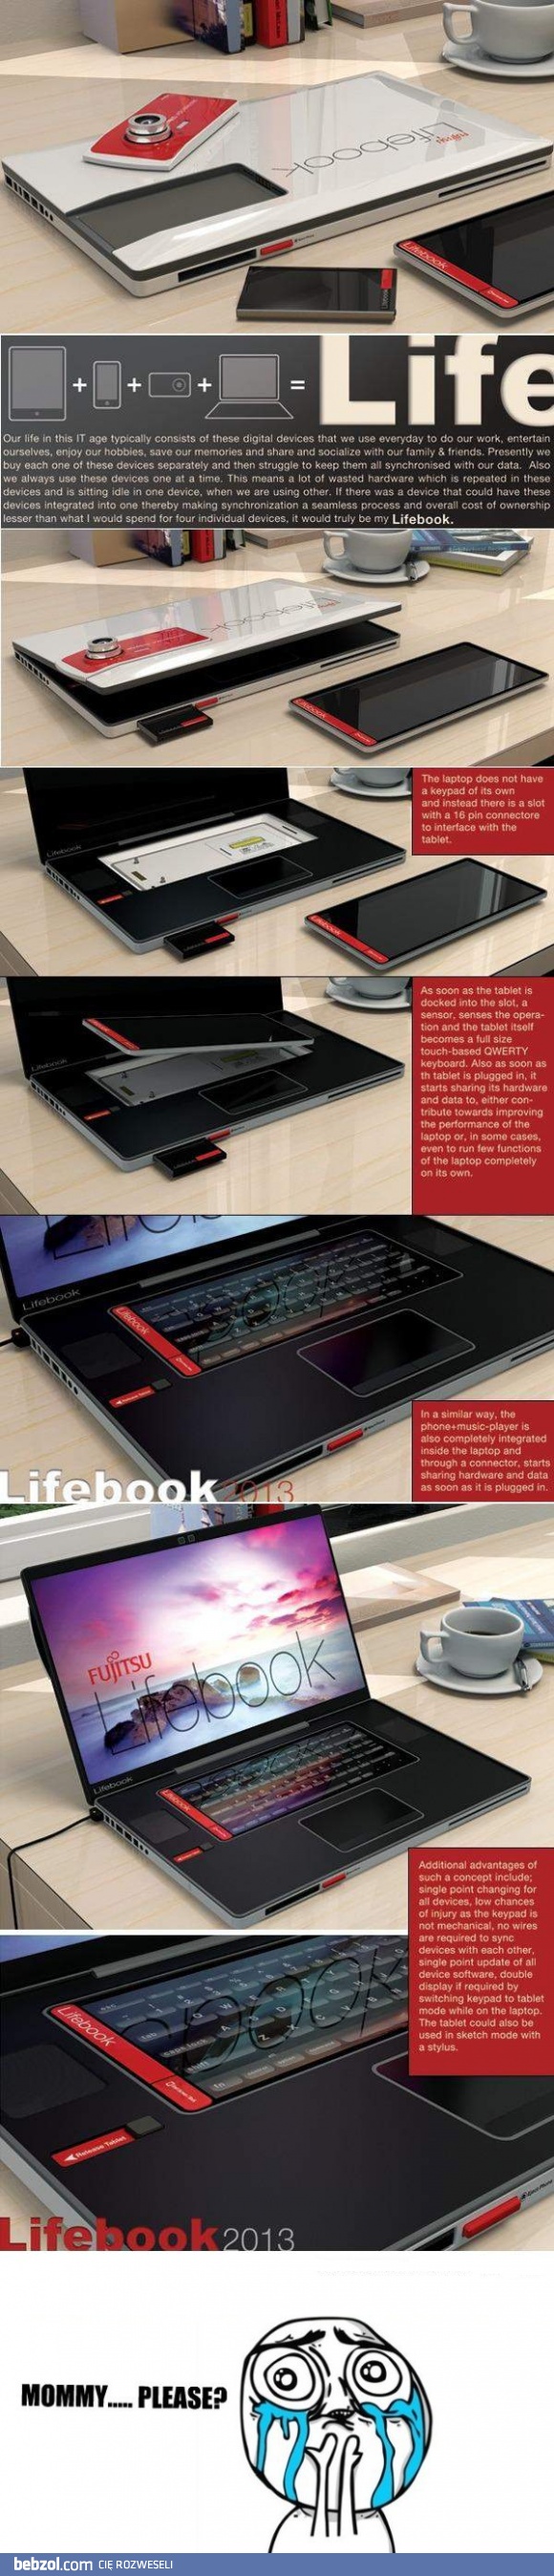 LifeBook 2013 - laptop, tablet, smartfon i aparat w jednym